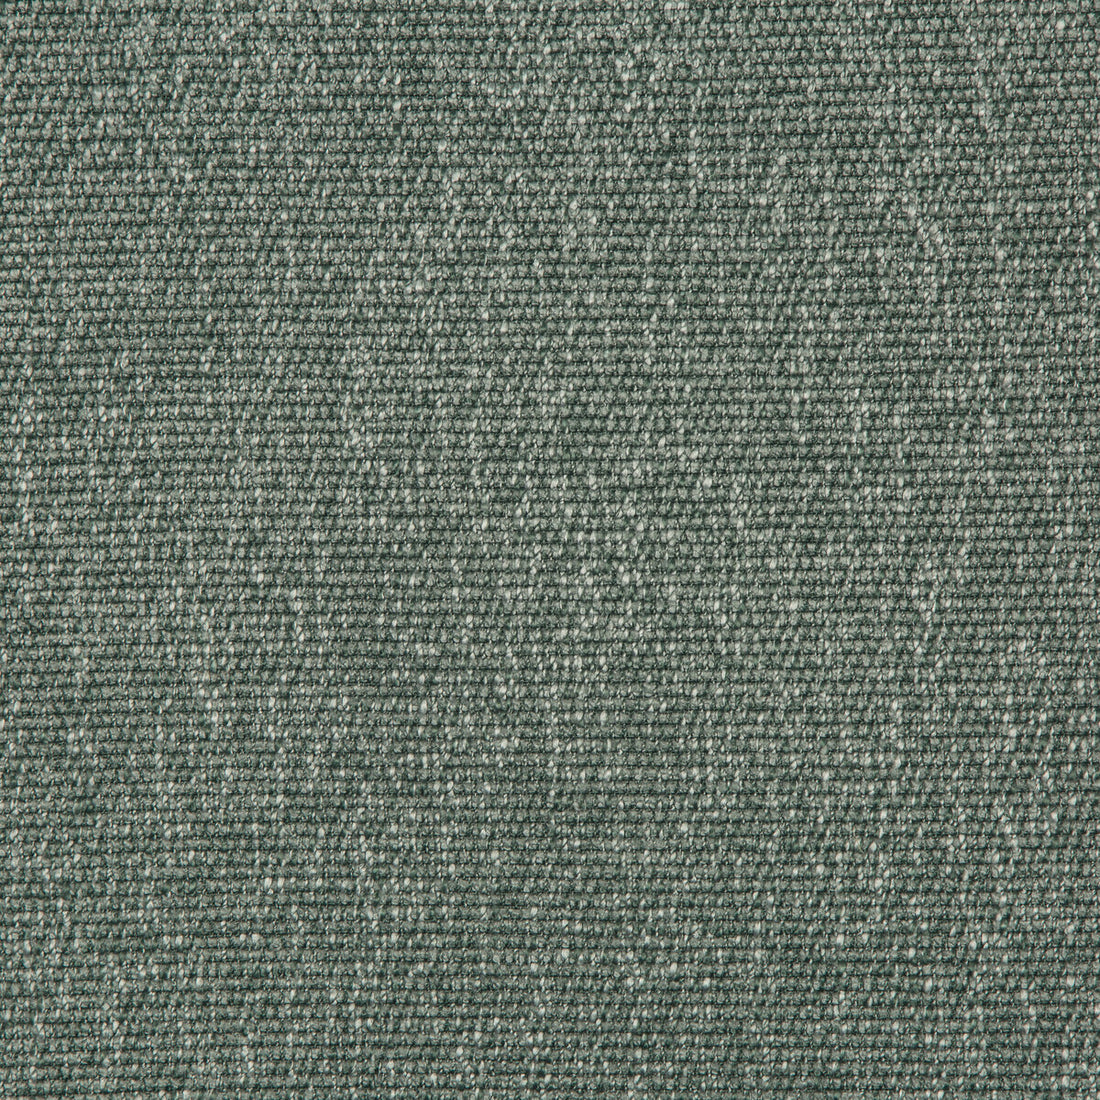 Kravet Smart fabric in 35943-35 color - pattern 35943.35.0 - by Kravet Smart in the Performance Kravetarmor collection